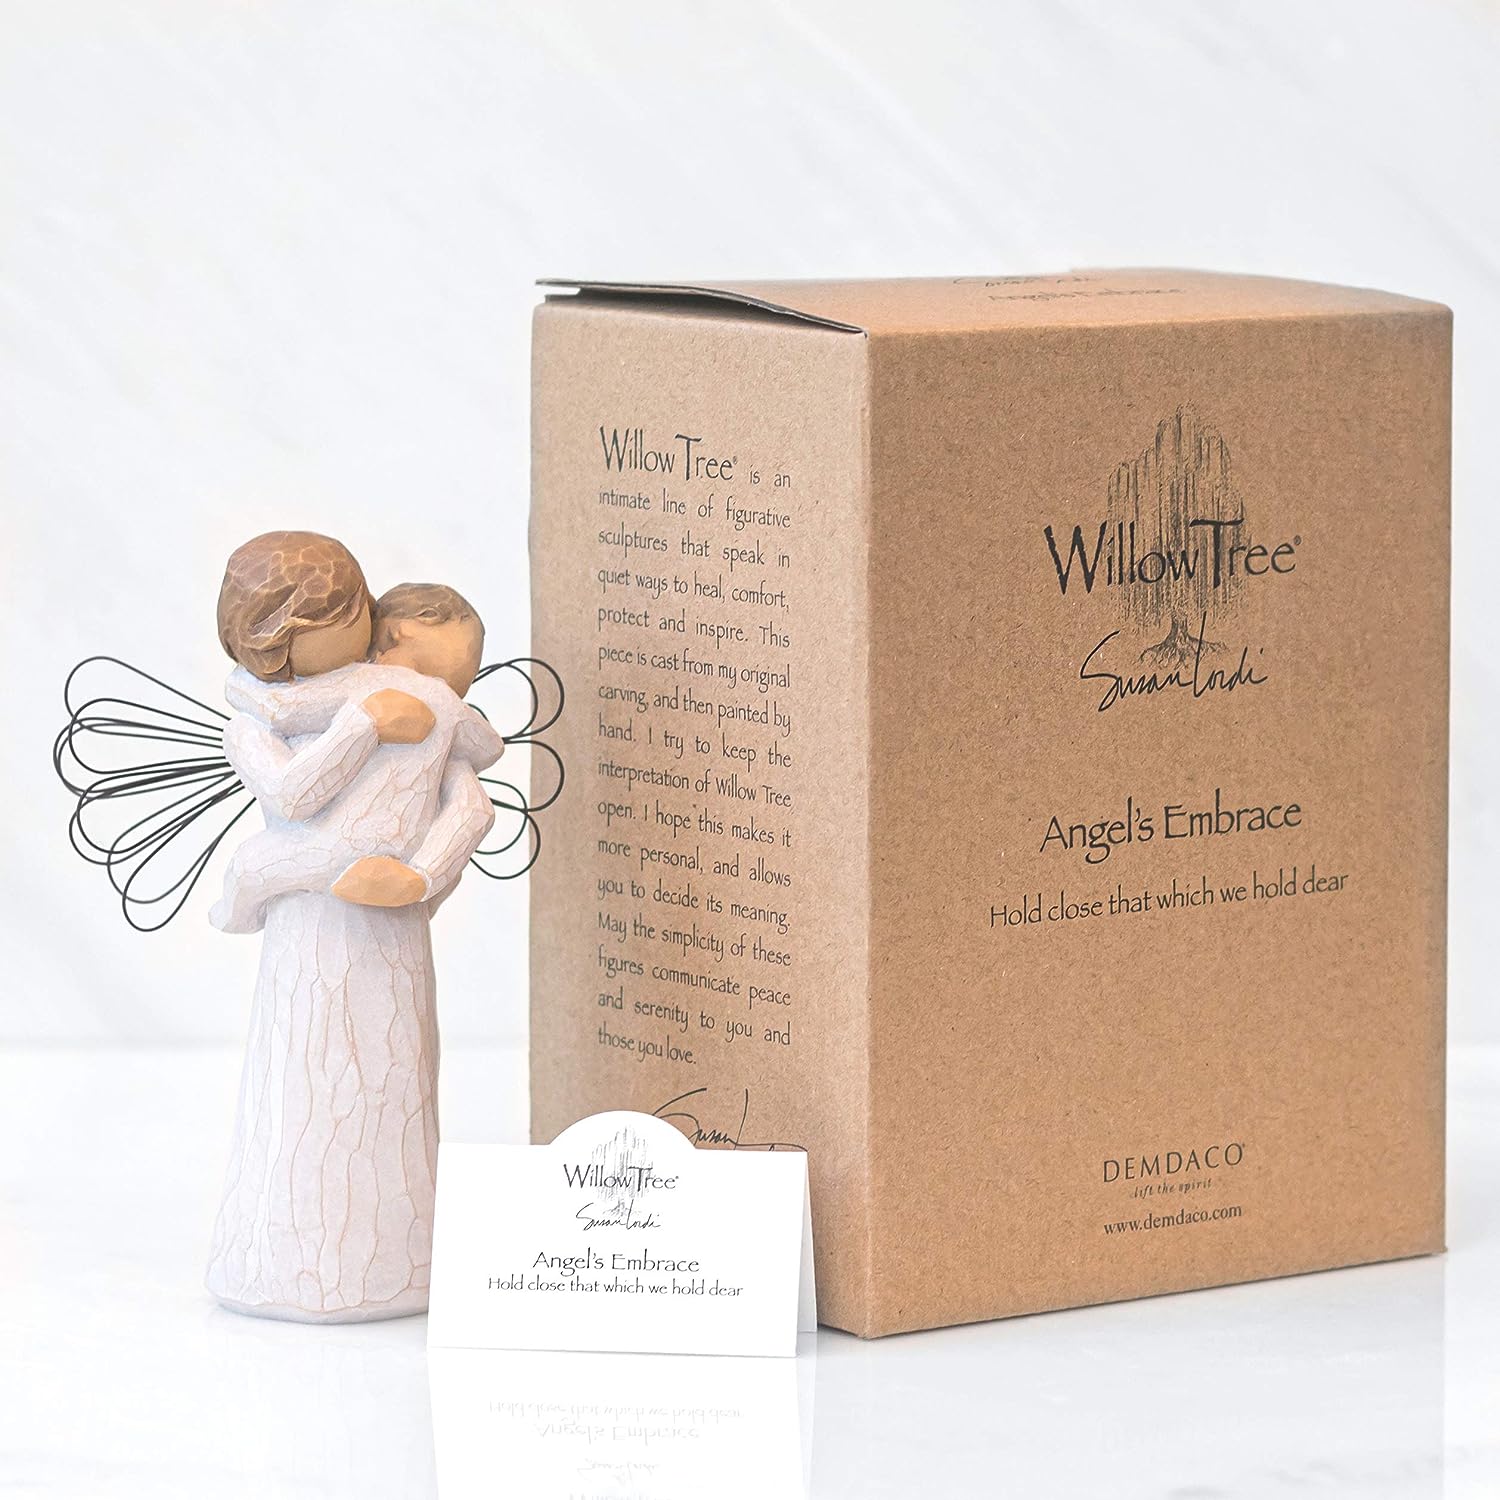 Angels-Embrace-Willow-Tree-figur-berlindeluxe-kind-engel-draht-box